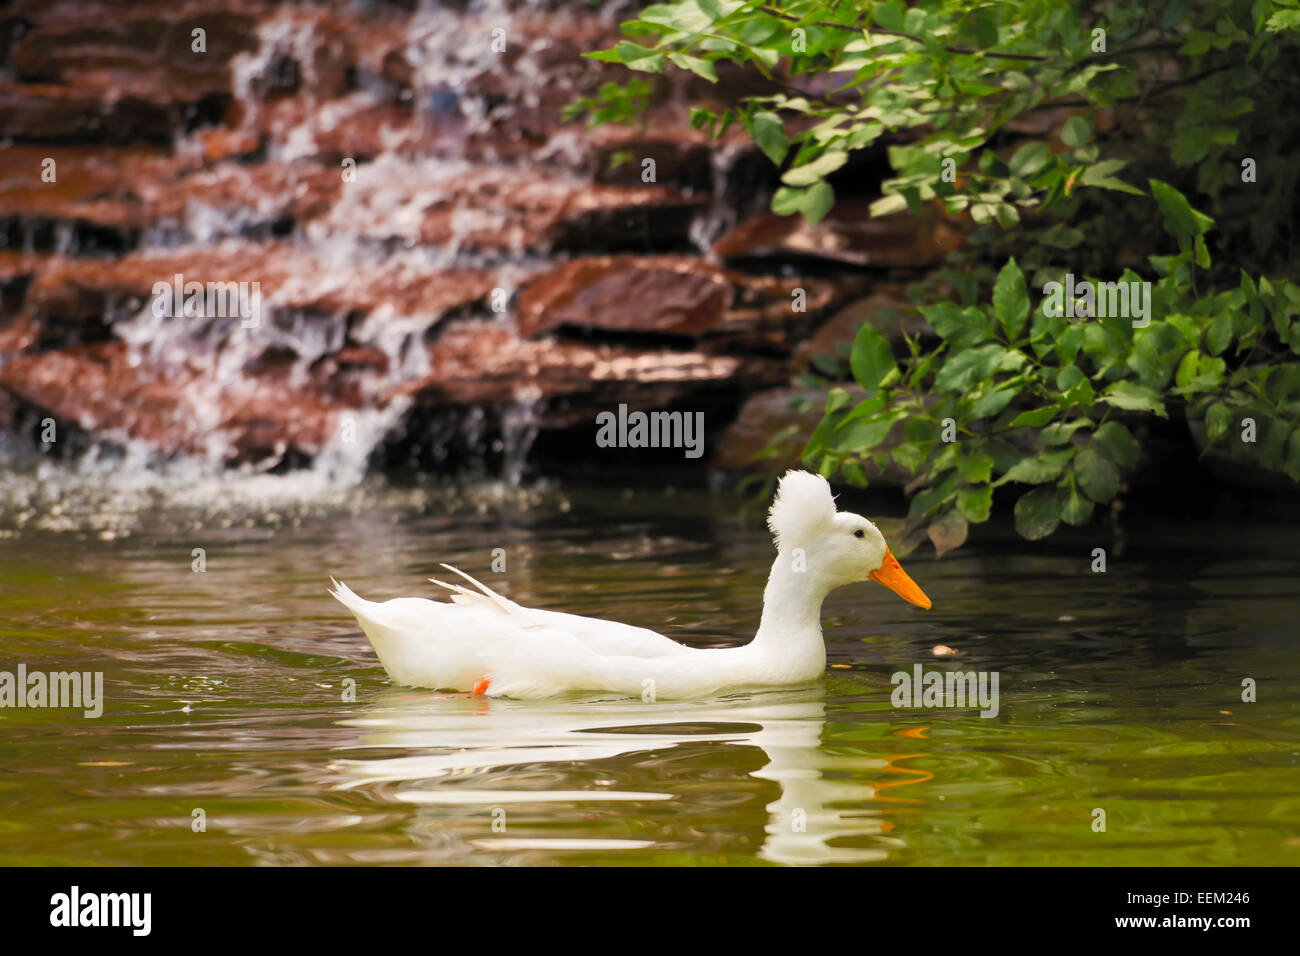 Canard blanc natation. Banque D'Images